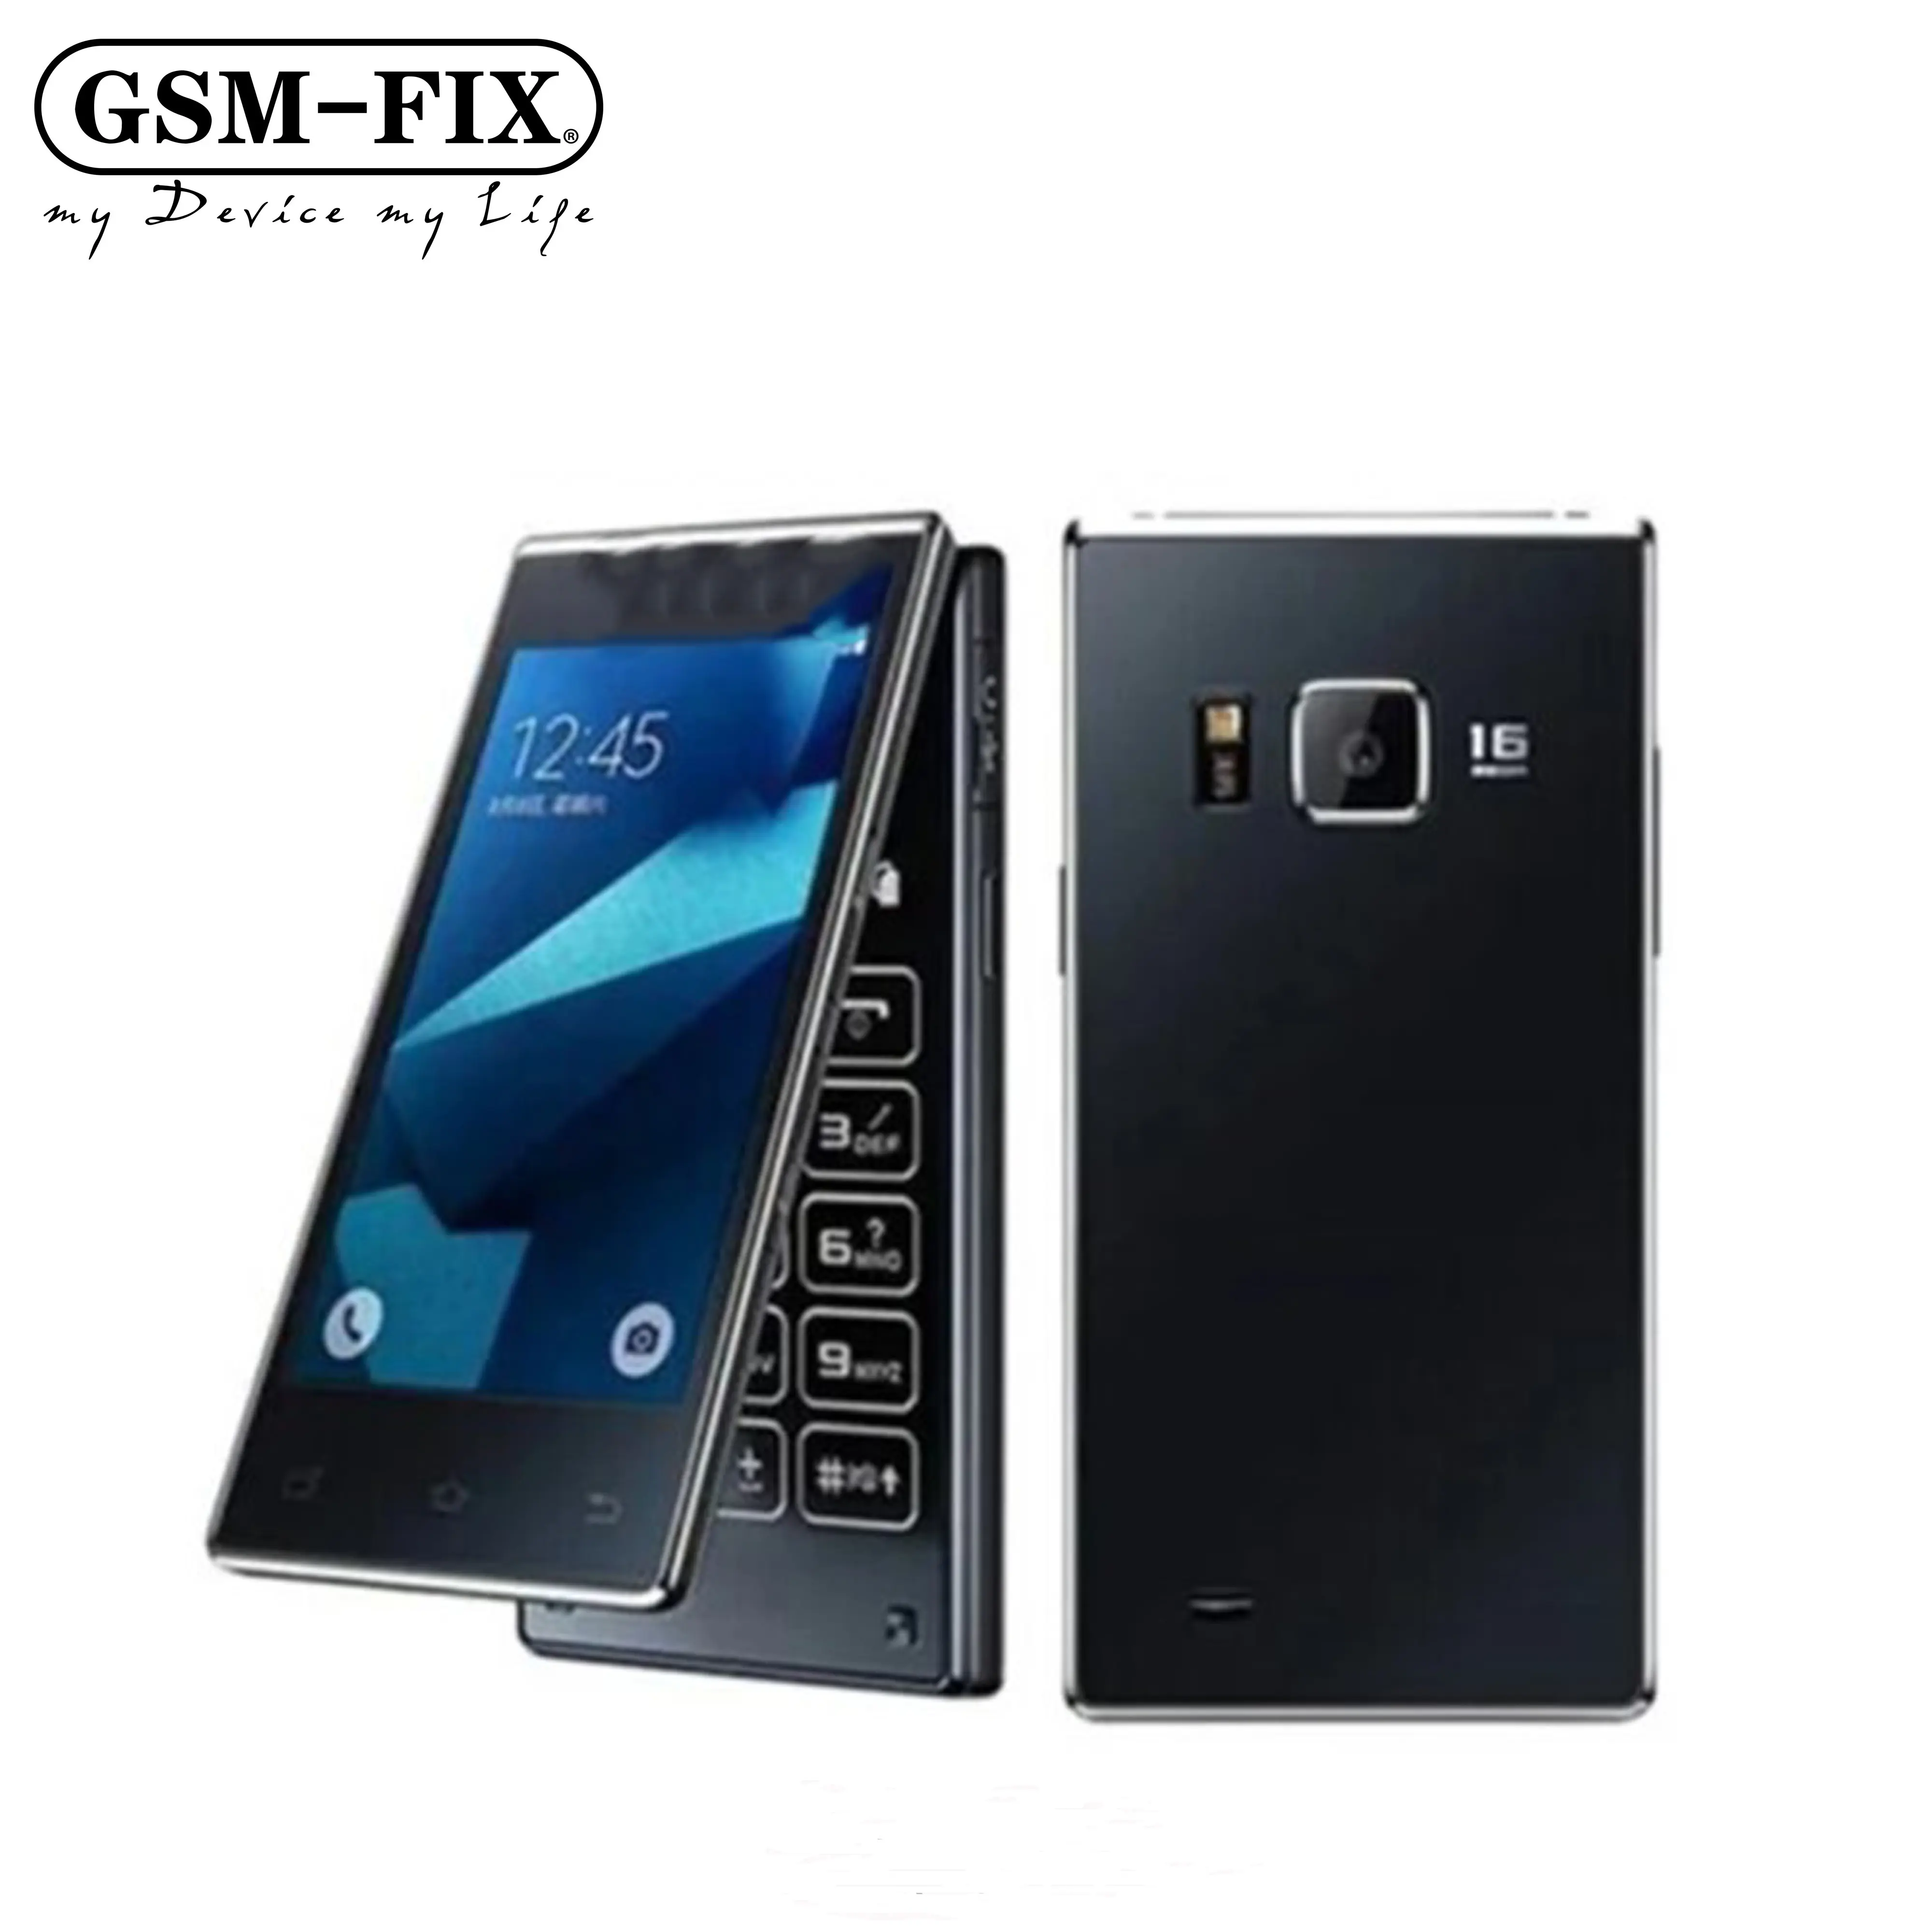 GSM-FIX originale per Samsung G9198 Hexa Core Dual Sim 2GB RAM 16GB ROM LTE 4G 16MP fotocamera 1080P Android Flip cellulare